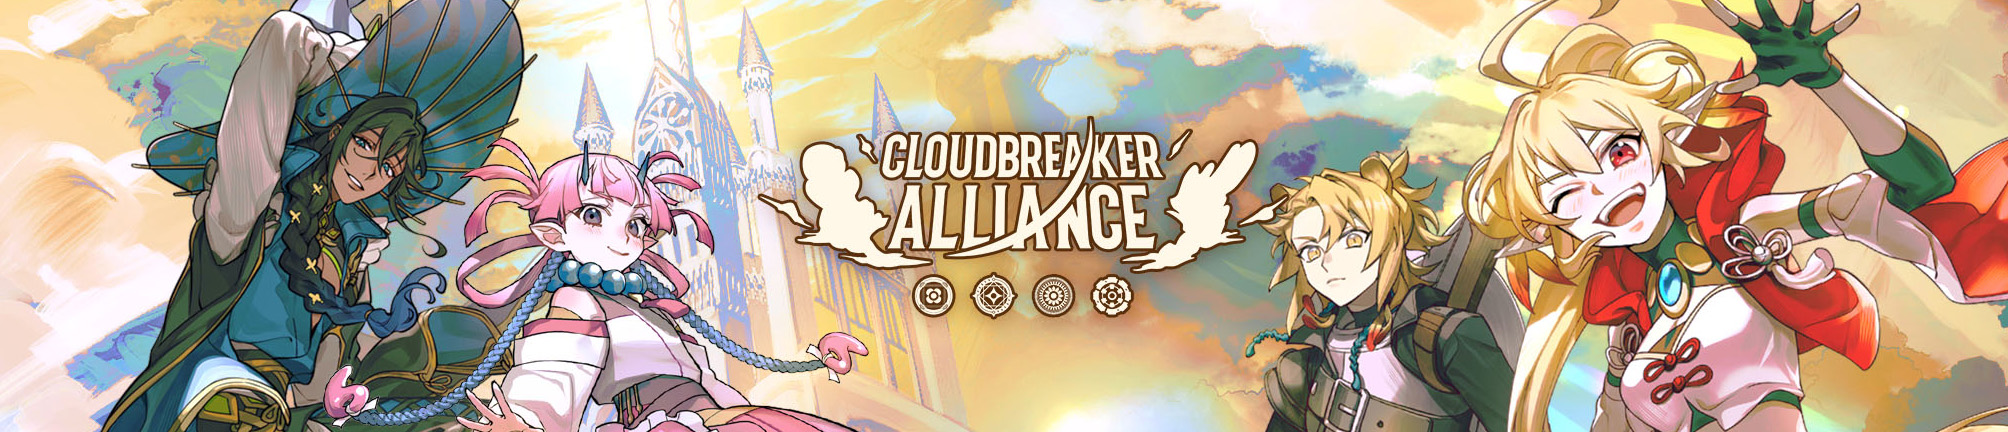 Cloudbreaker Alliance Digital Assets Vol 1